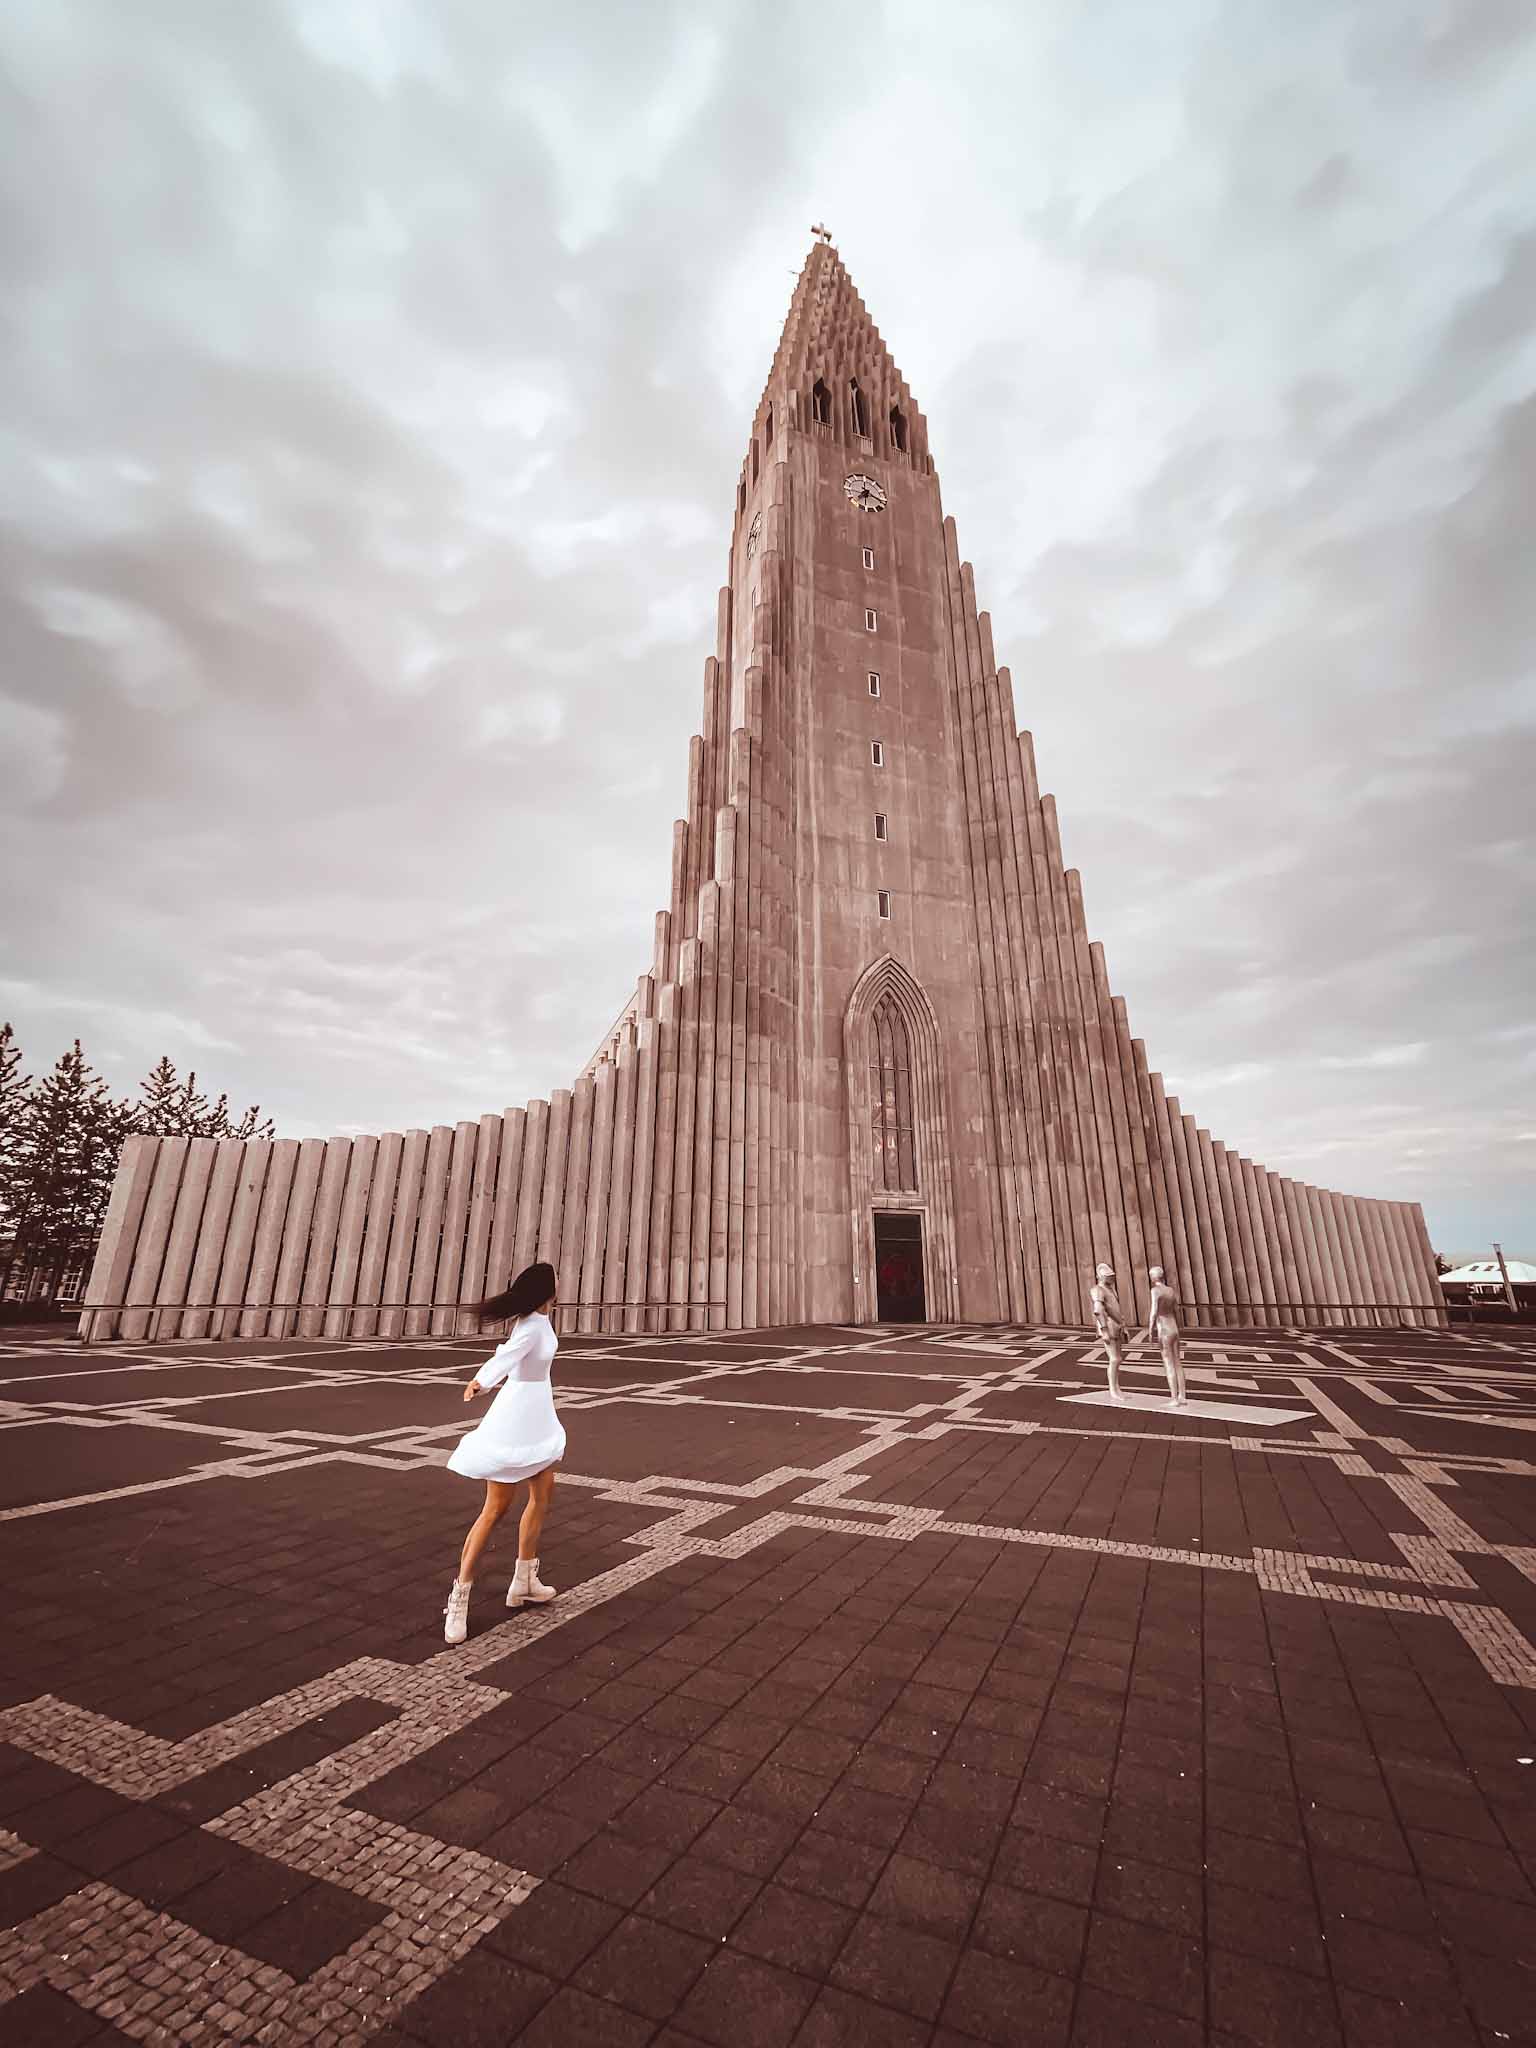 Hallgrimskirkja - Churches in Iceland 